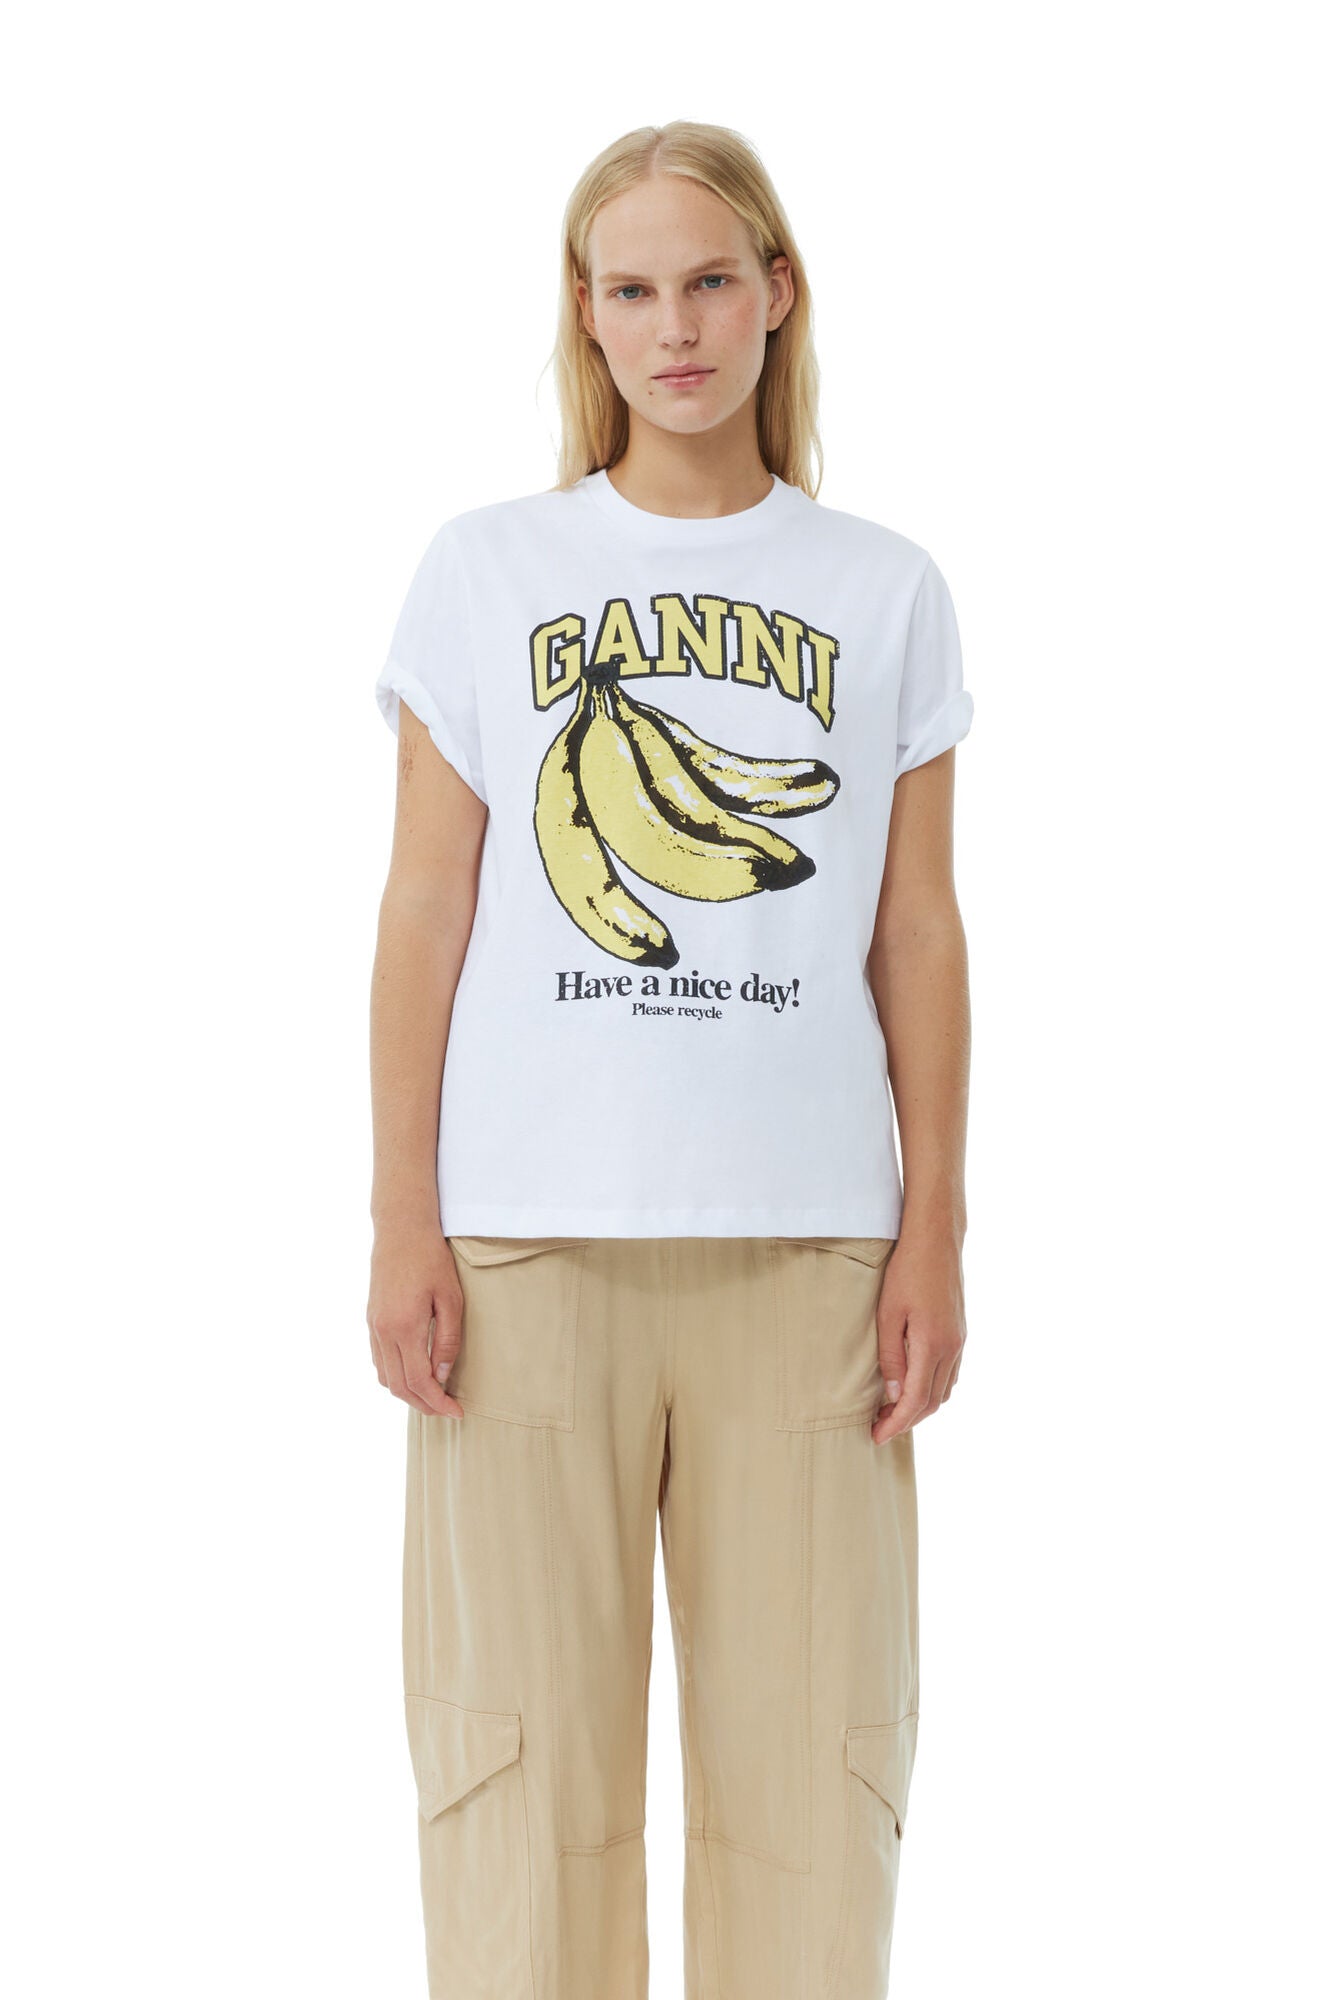 Basic Jersey Banana Relaxed T-Shirt - Bright White - GANNI - Danali - T3861